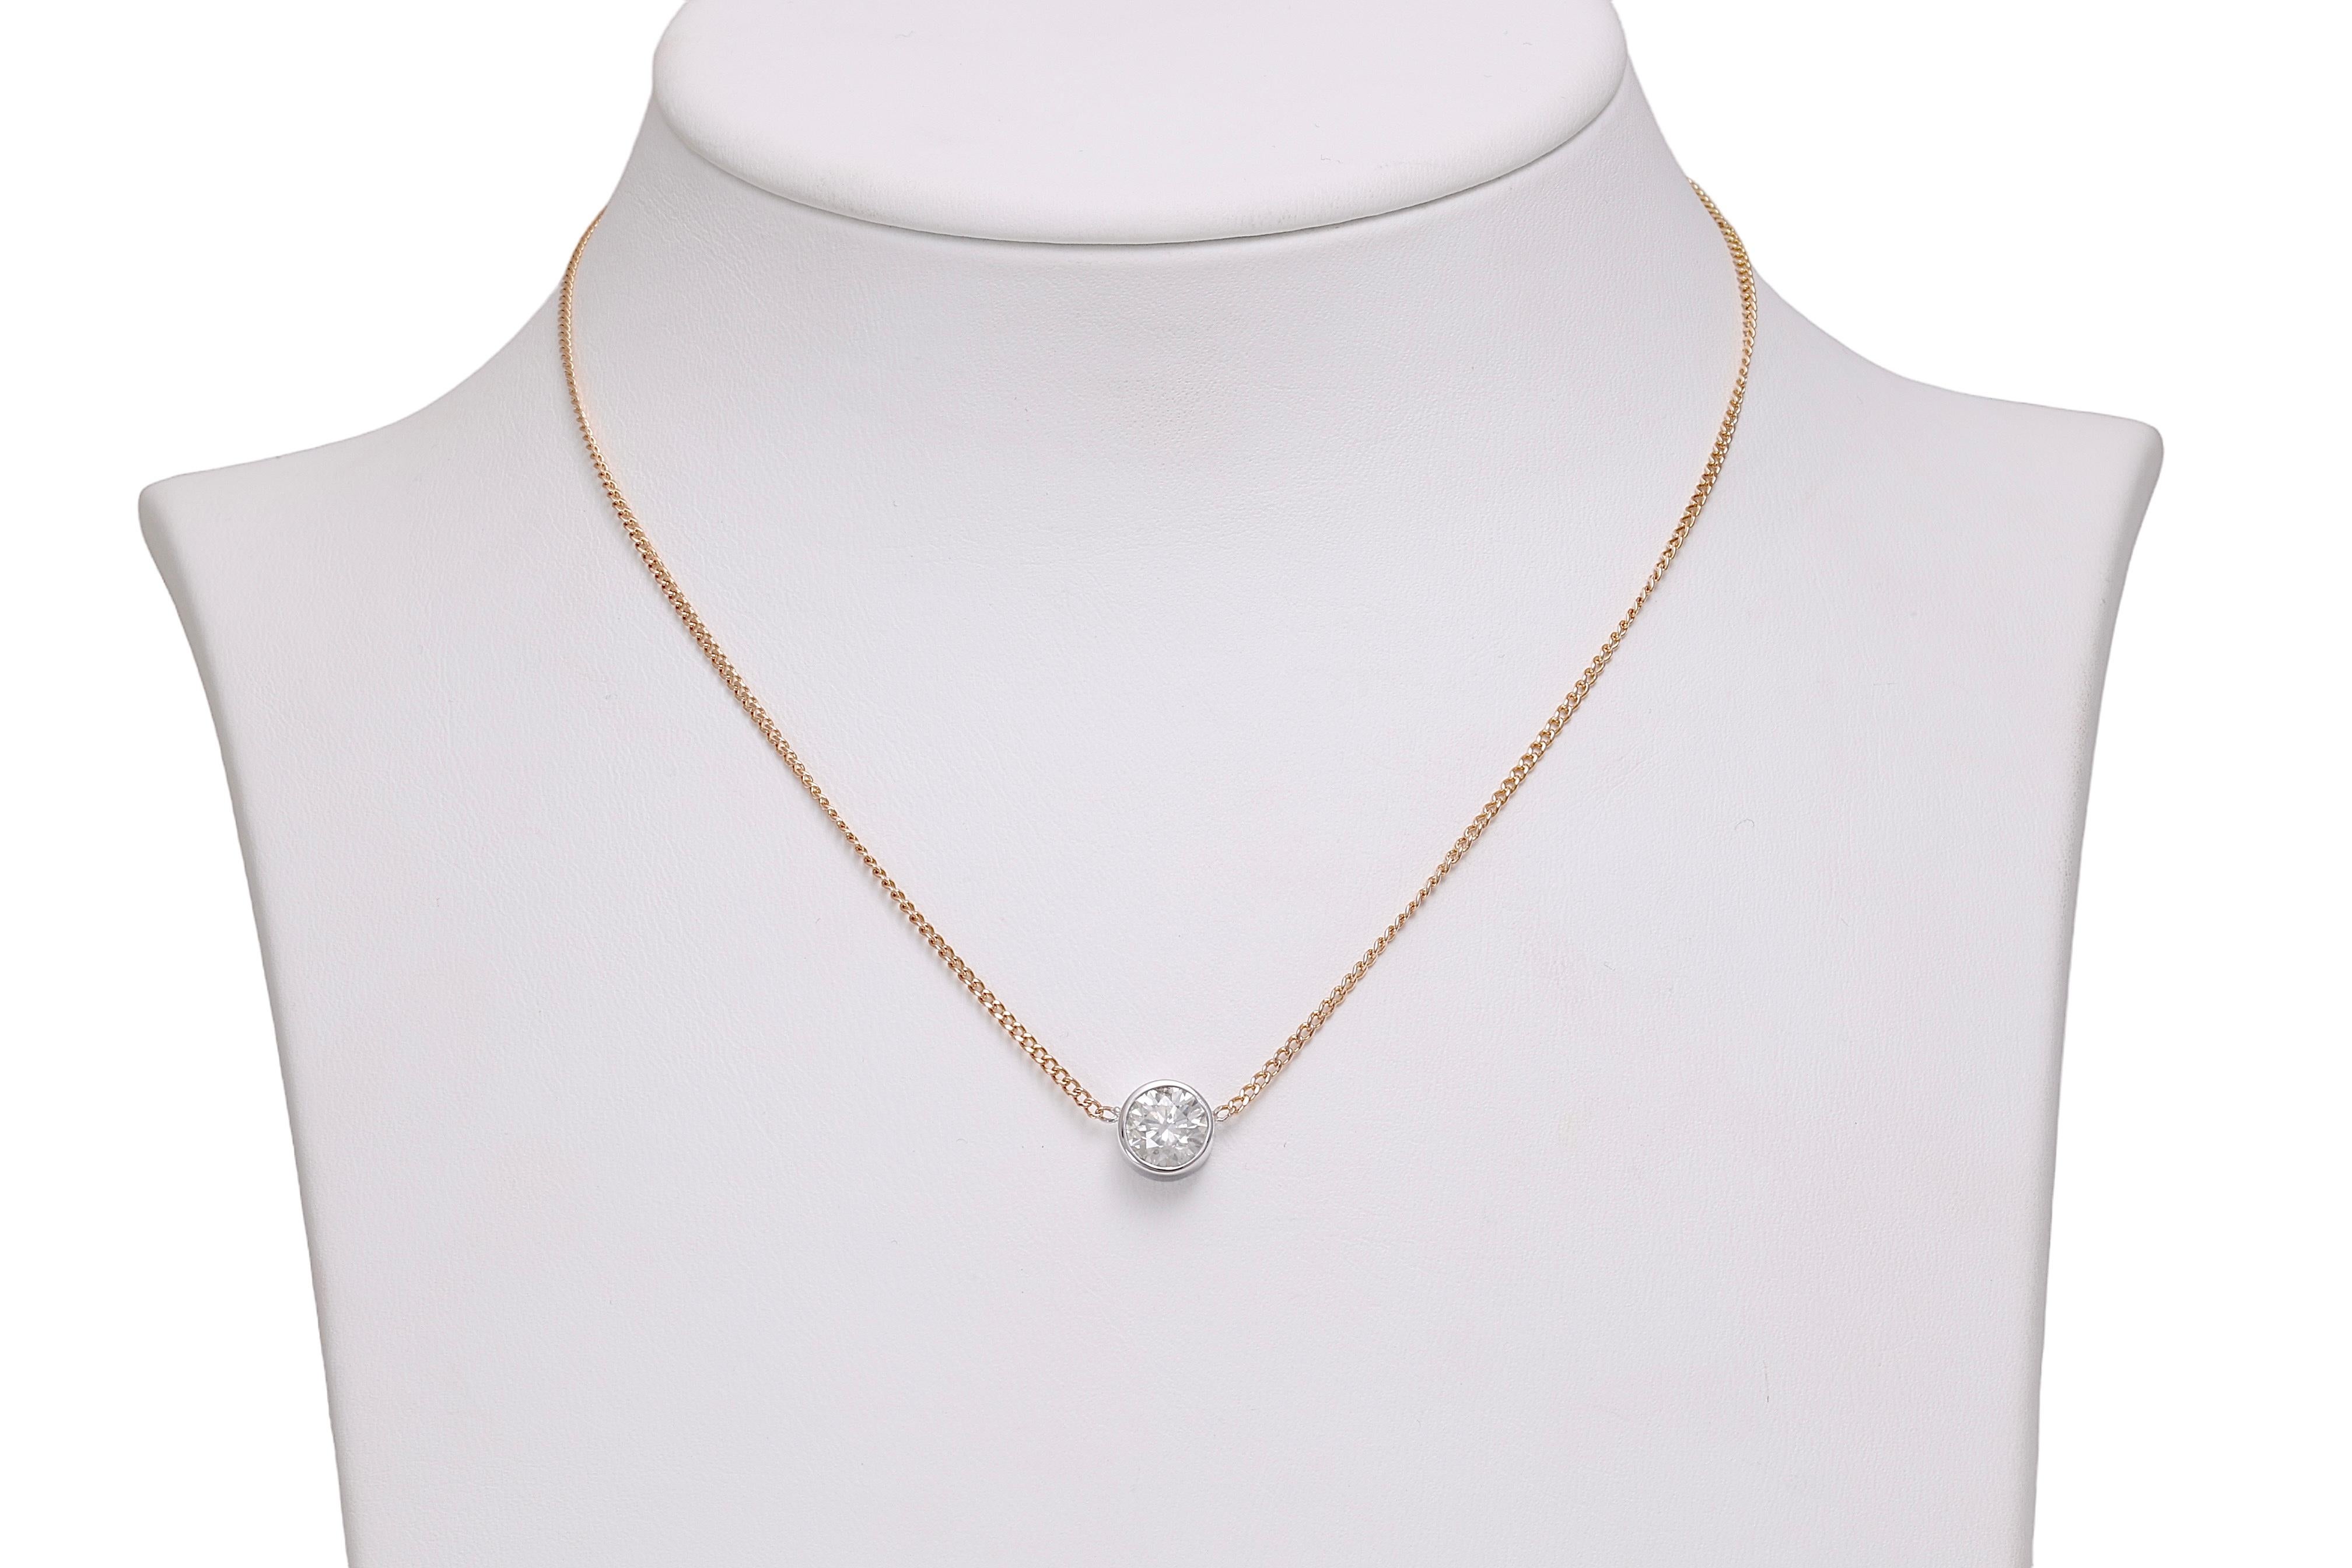 IGi Certified 18 kt. Gold Diamond Pendant Choker Necklace with 1.06 ct. Diamond For Sale 2